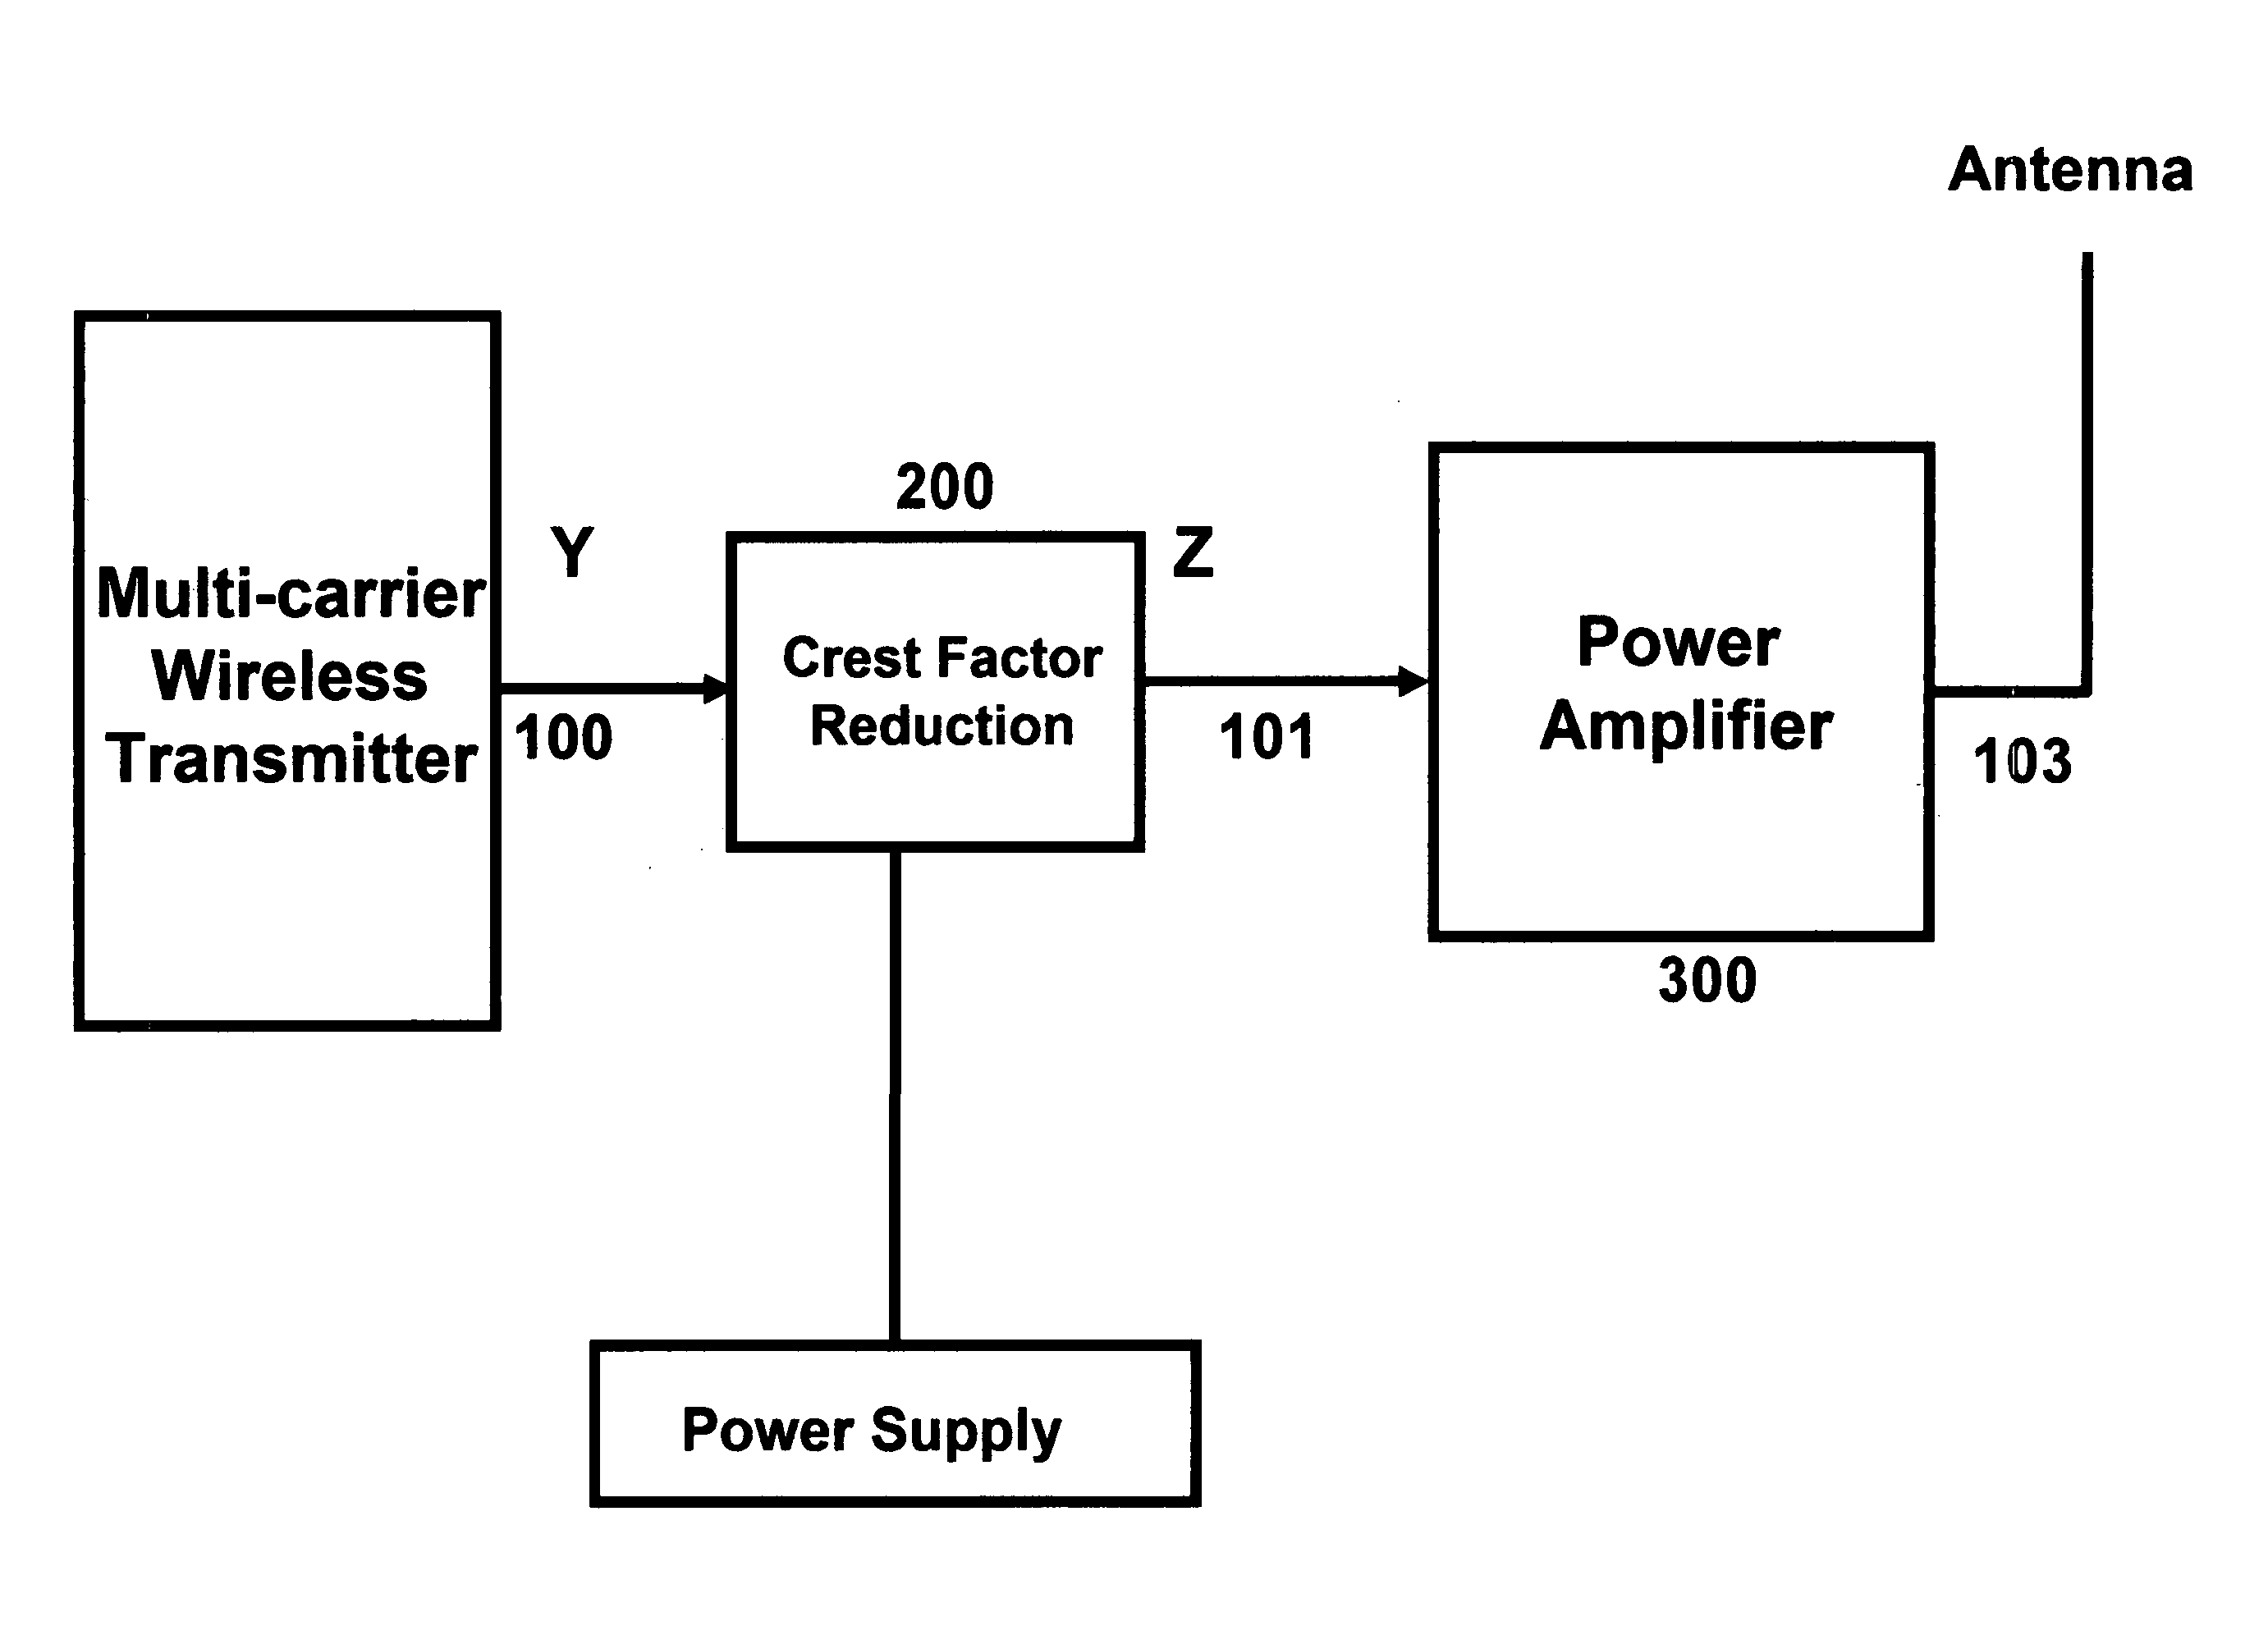 Simple Crest Factor reduction technique for multi-carrier signals